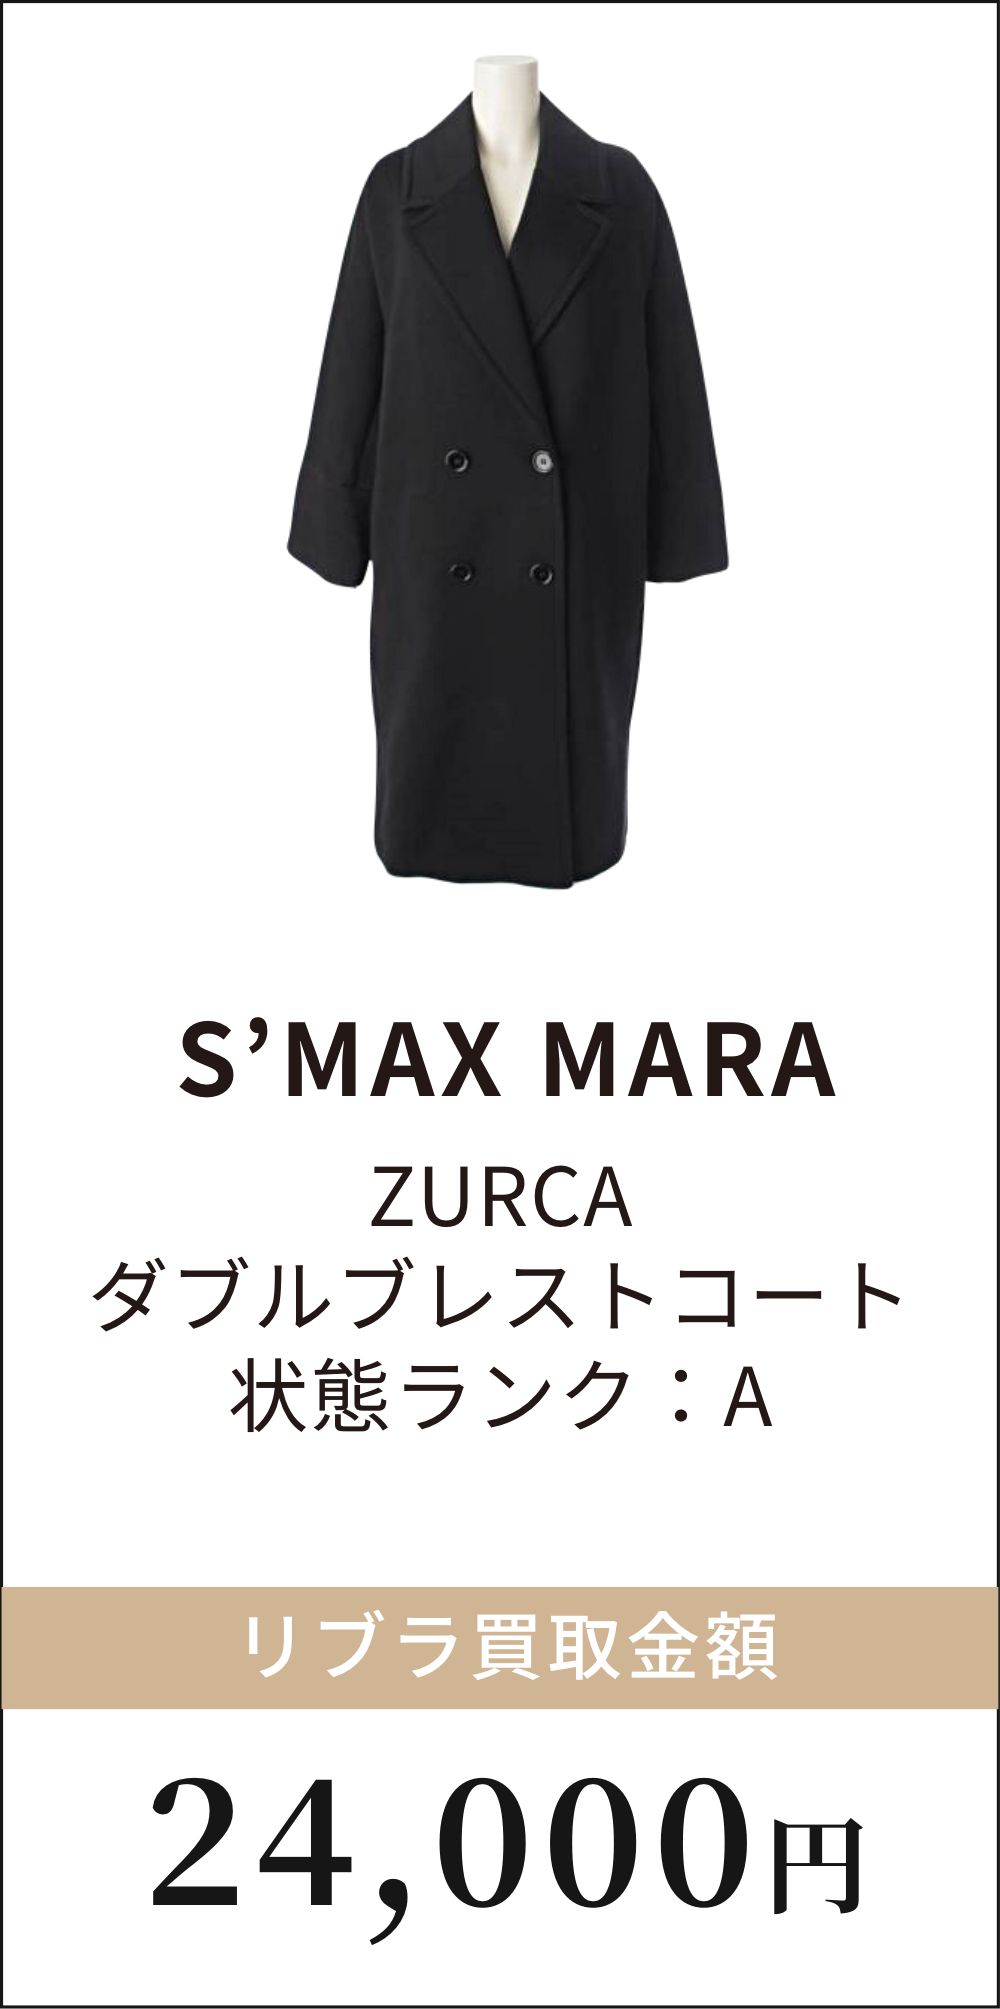 S' MAX MARA ZURCA ダブルブレストコート